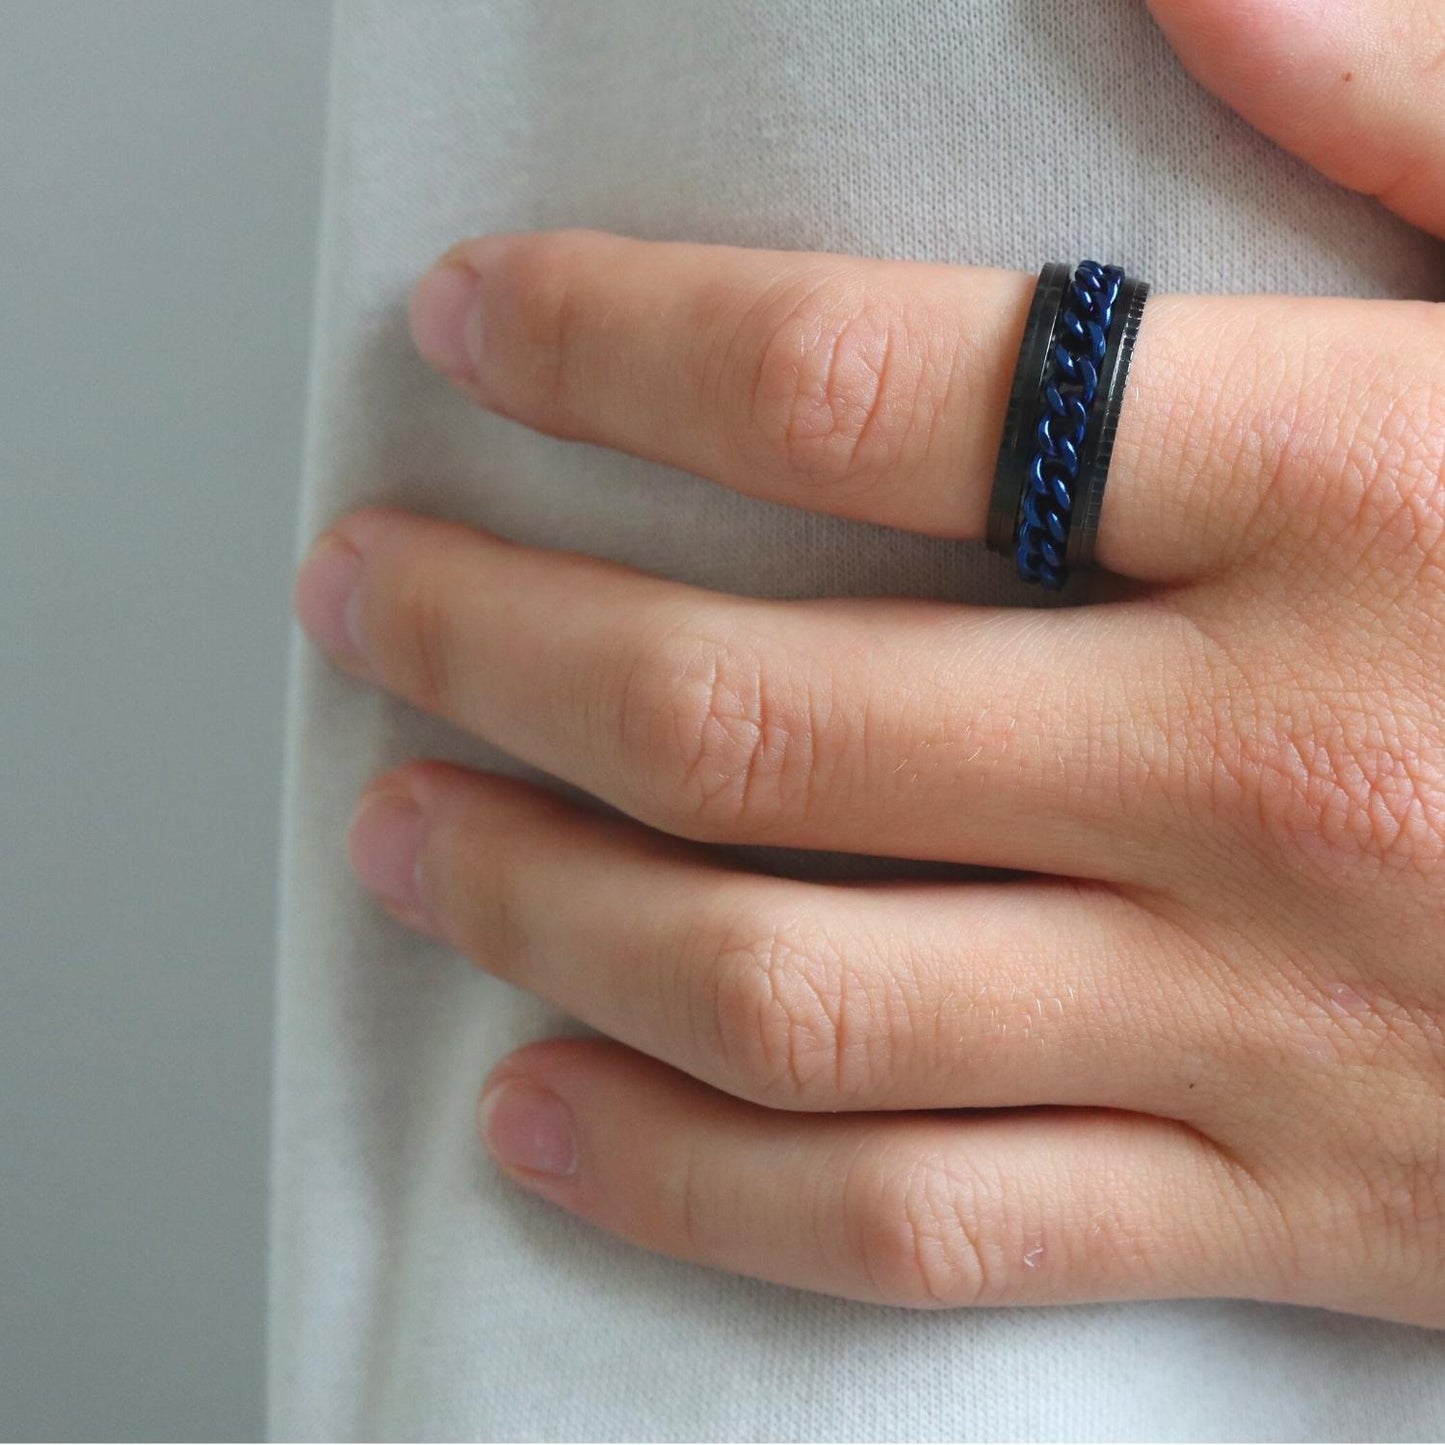 Anxiety Ring (ketting) Zwart-Blauw om vinger